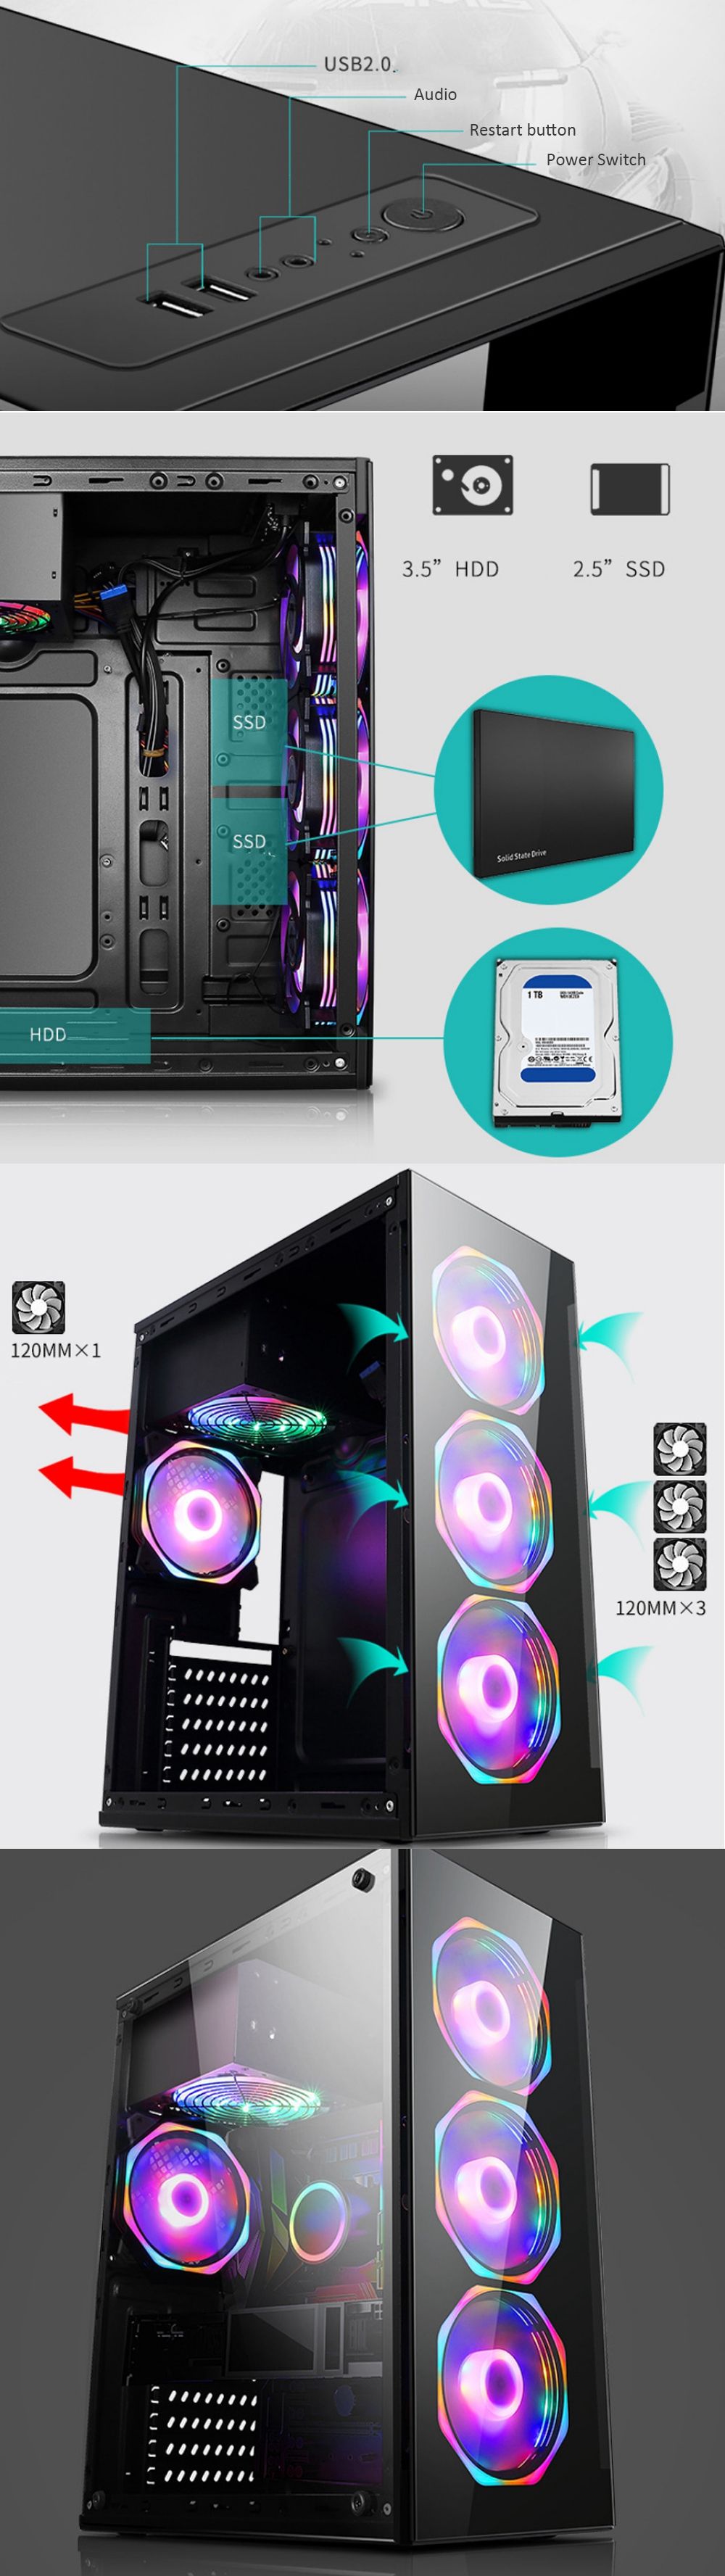 Gaming-Case-ATX--M-ATX--MINI-ITX-PC-Computer-Case-USB20-SPCC-Transparent-Desktop-Chassis-1600098